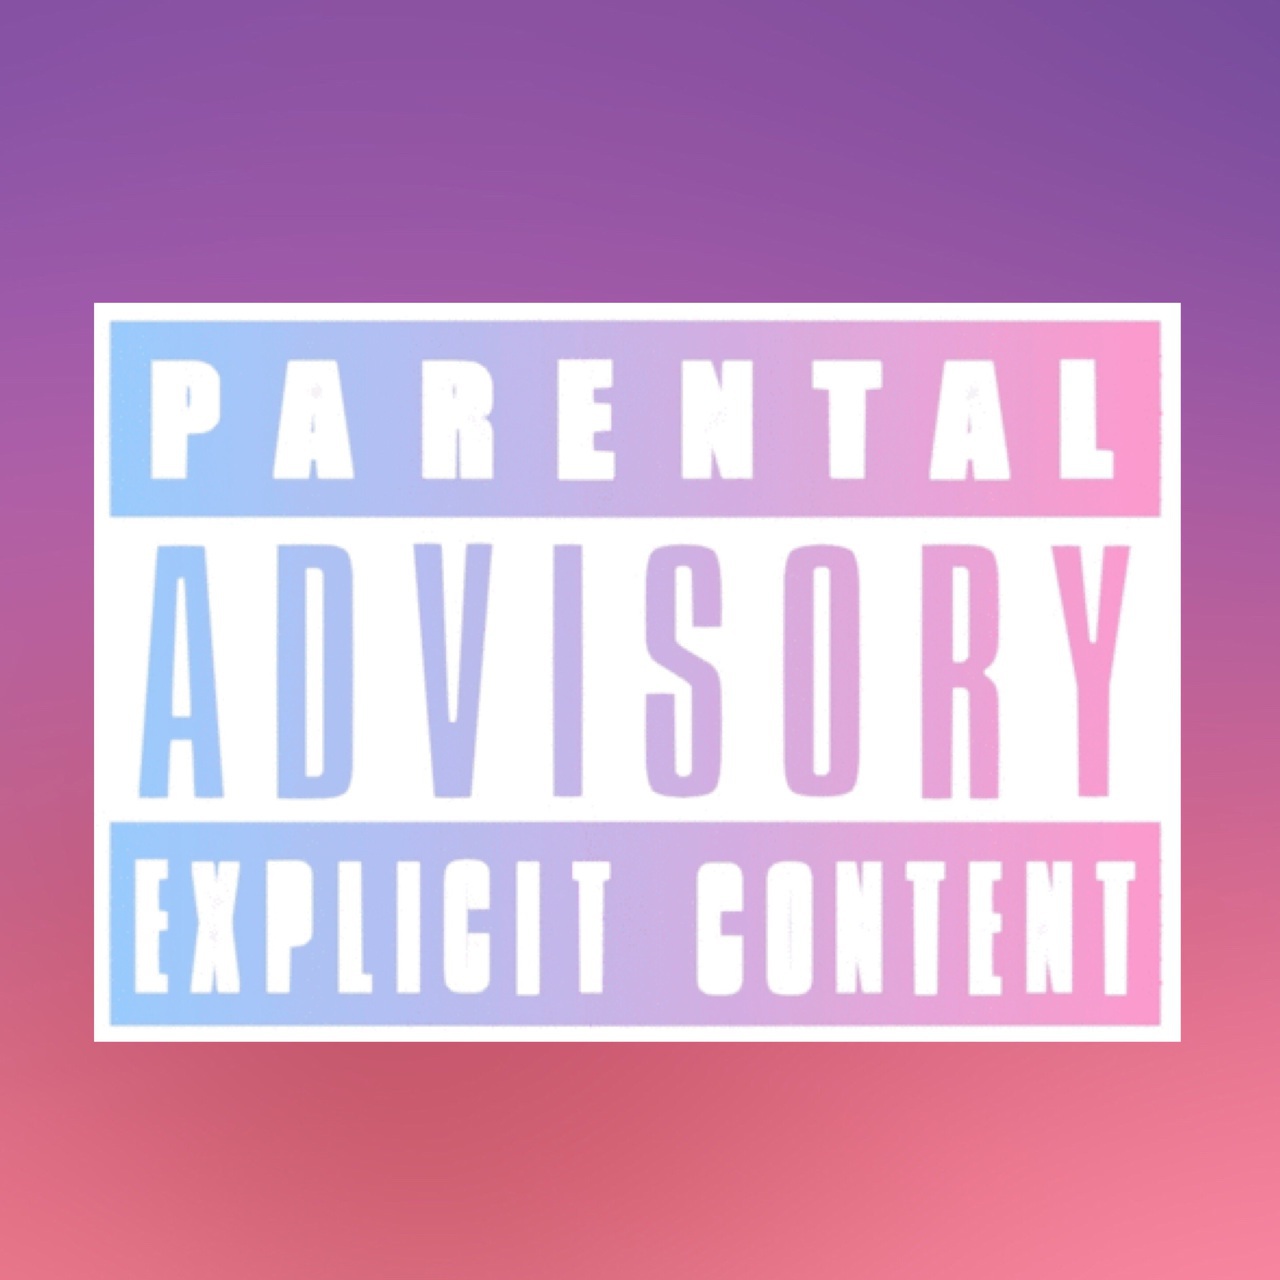 Parental Advisory, Explicit, And Advisory Image - Colorfulness - HD Wallpaper 